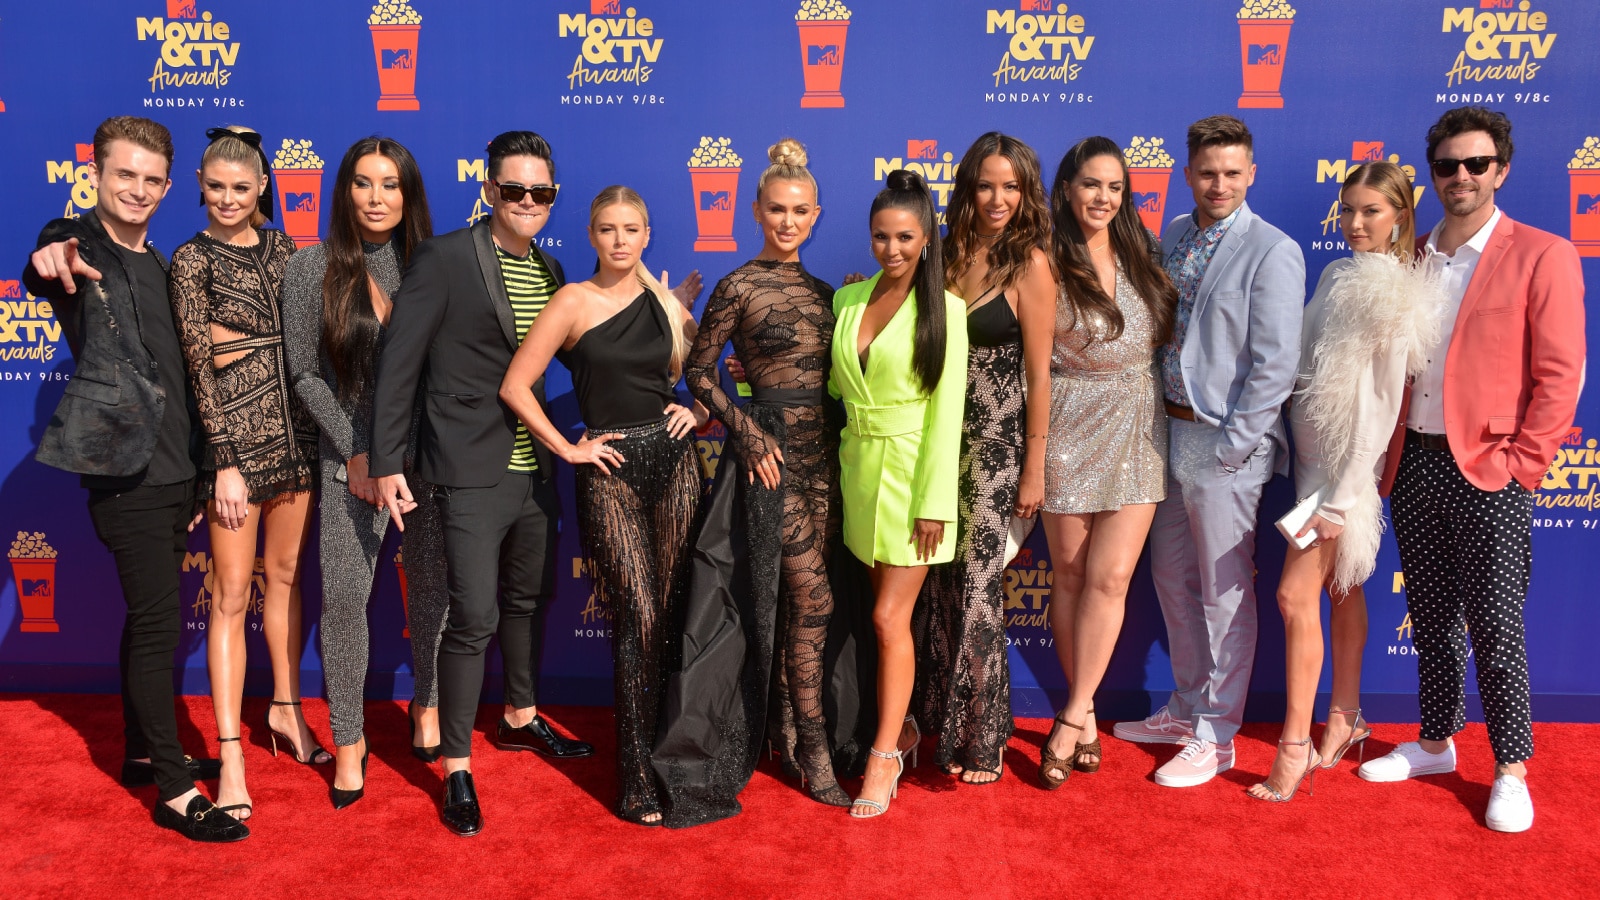 Vanderpump Rules, the cast 148 attends the 2019 MTV Movie and TV Awards at Barker Hangar on June 15, 2019 in Santa Monica, California